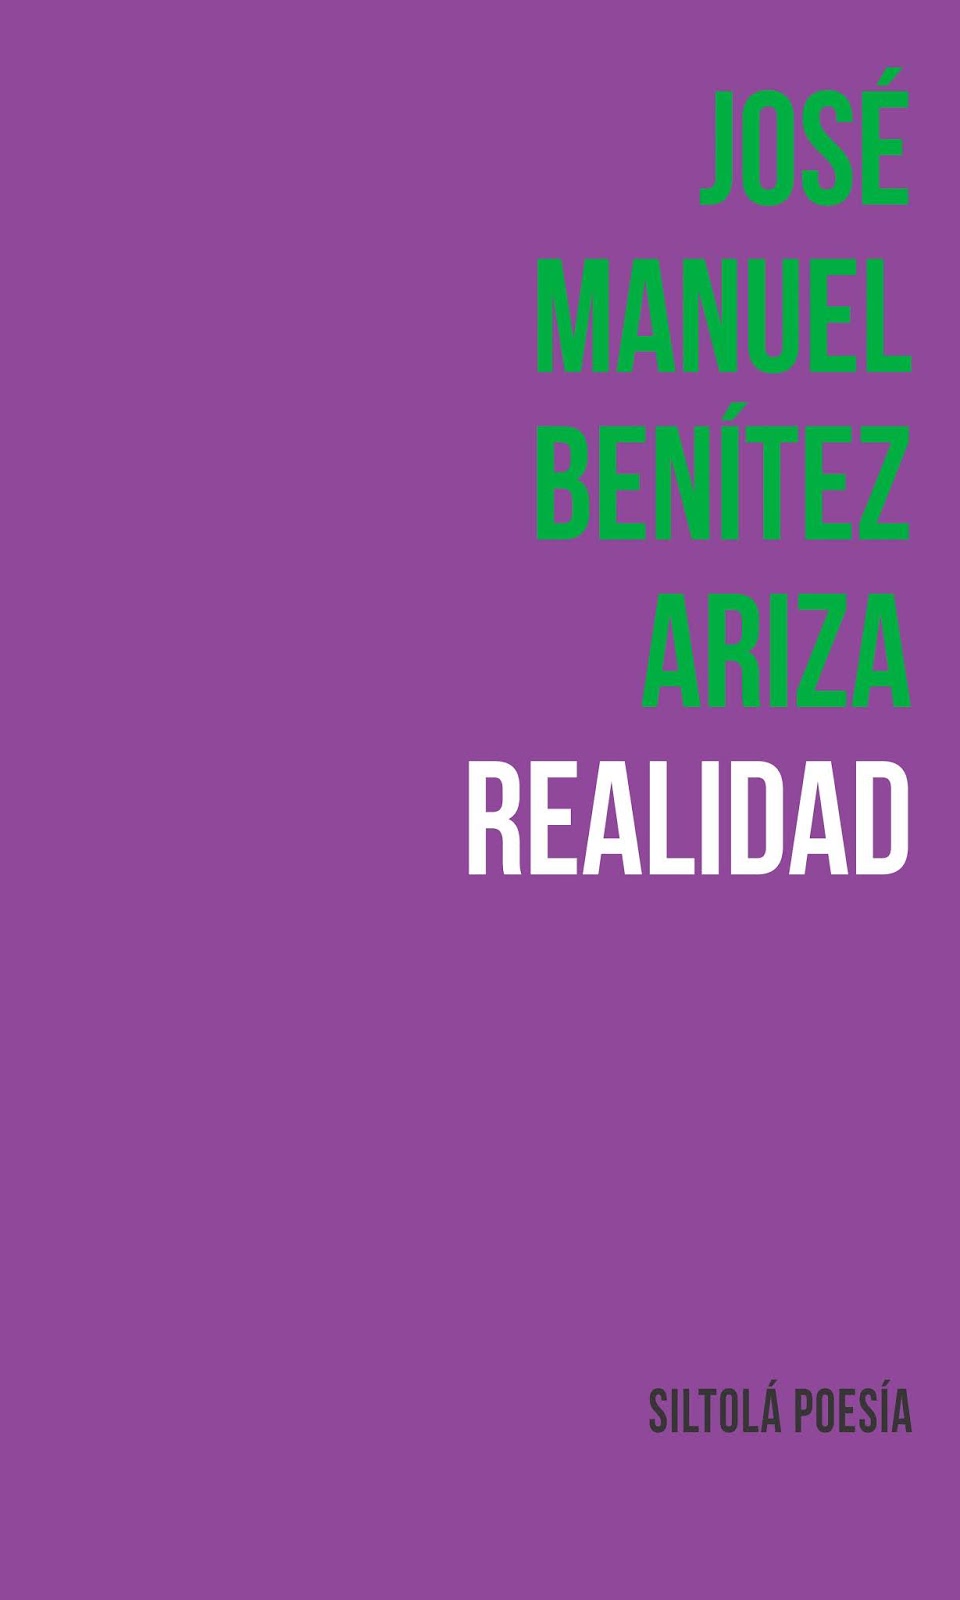 JOSÉ MANUEL BENÍTEZ ARIZA. REALIDAD | carlosalcorta